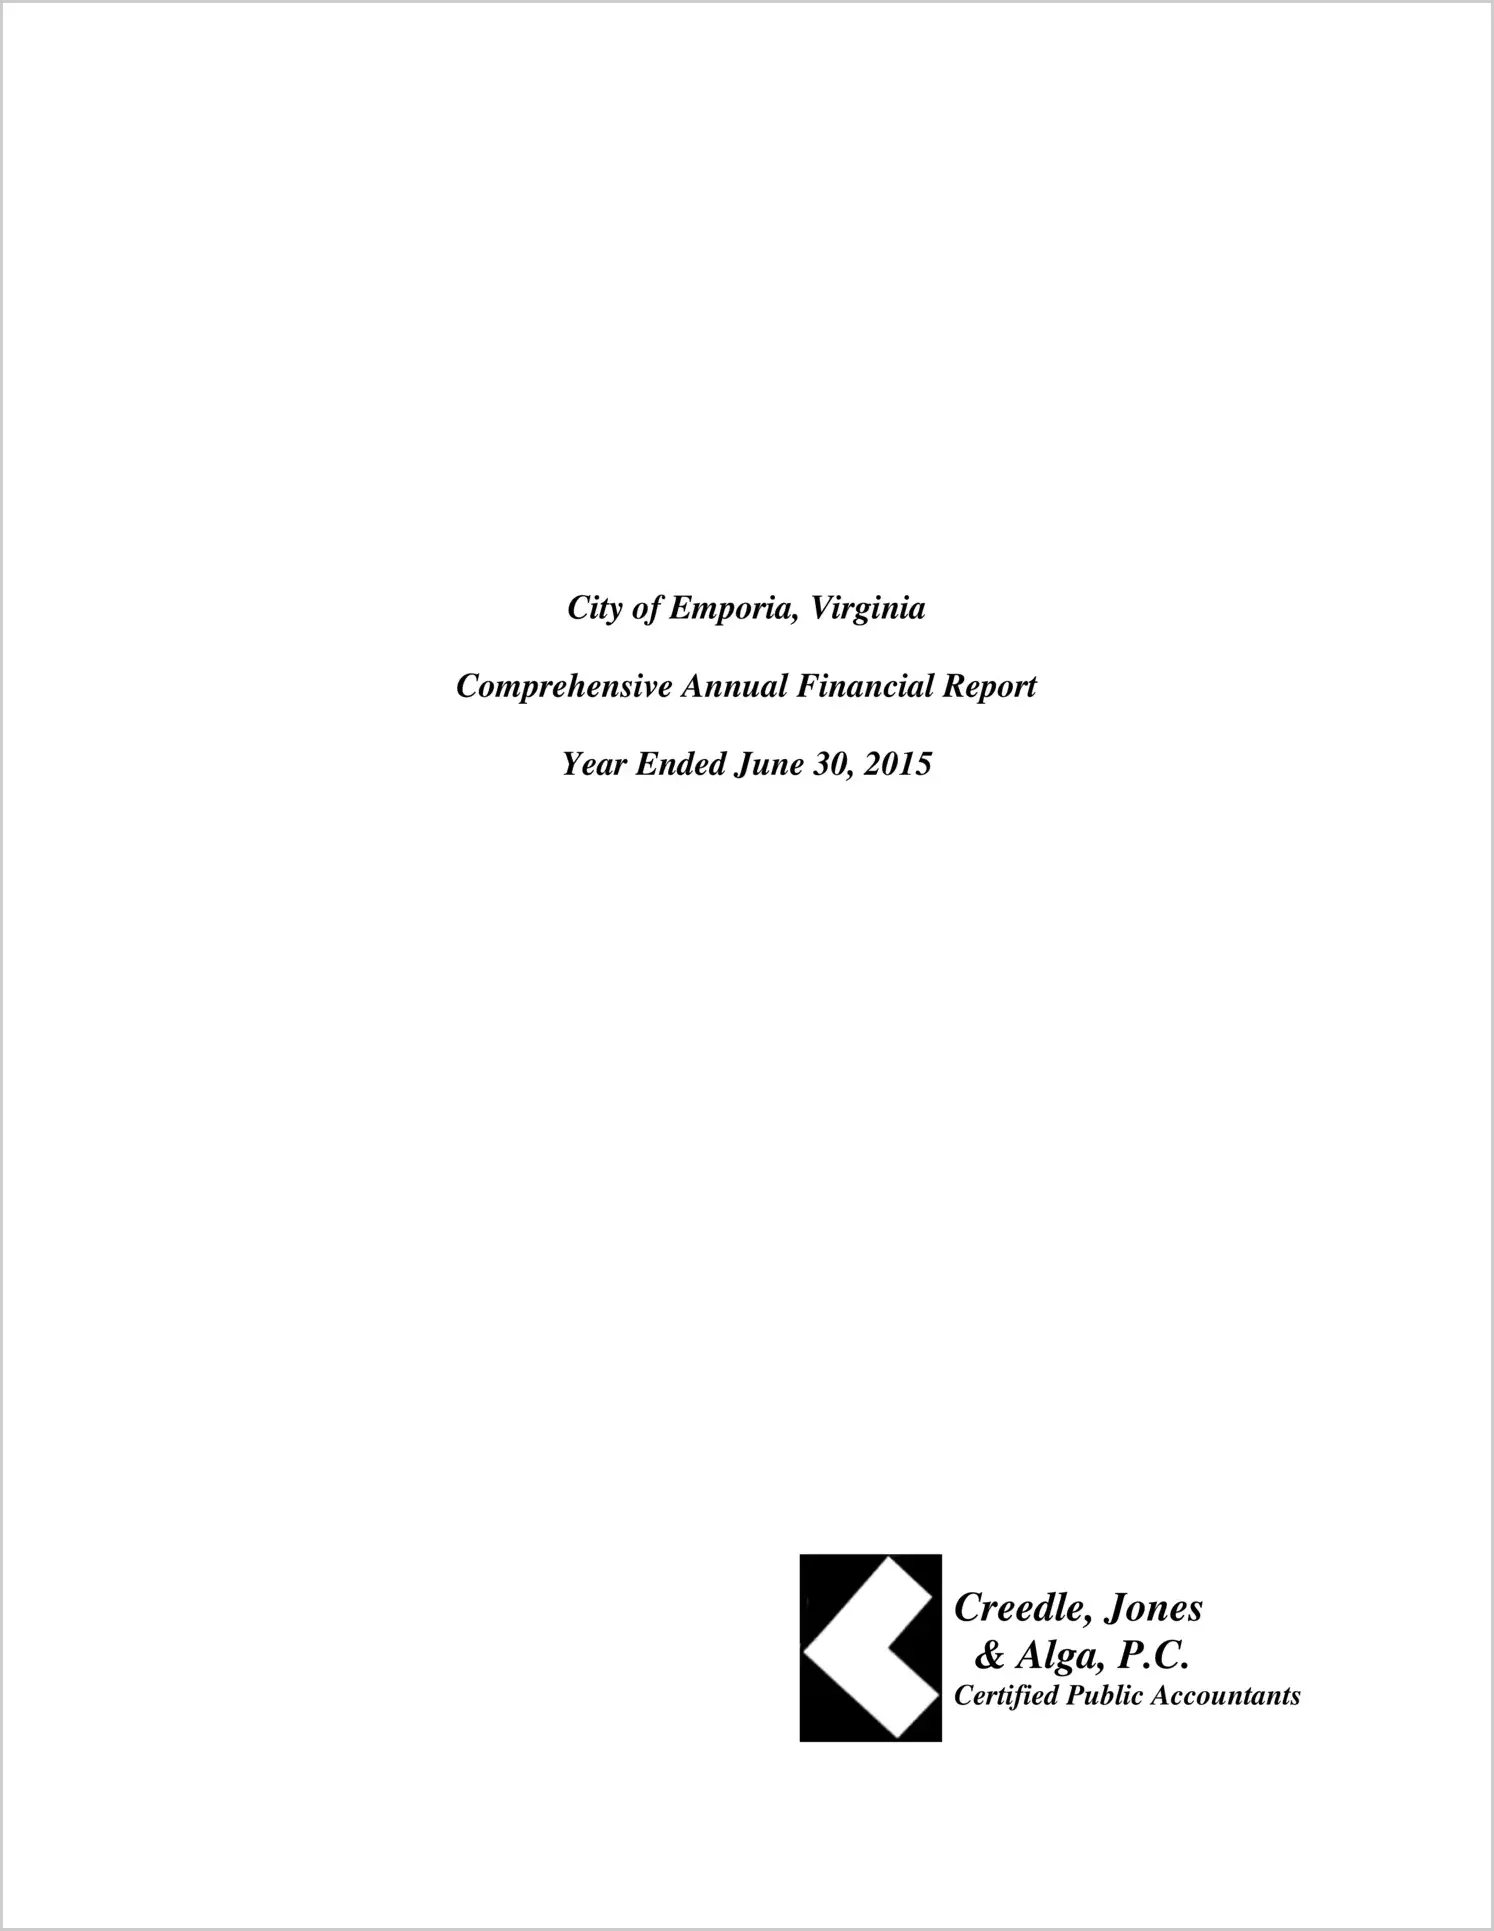 2015 Annual Financial Report for City of Emporia